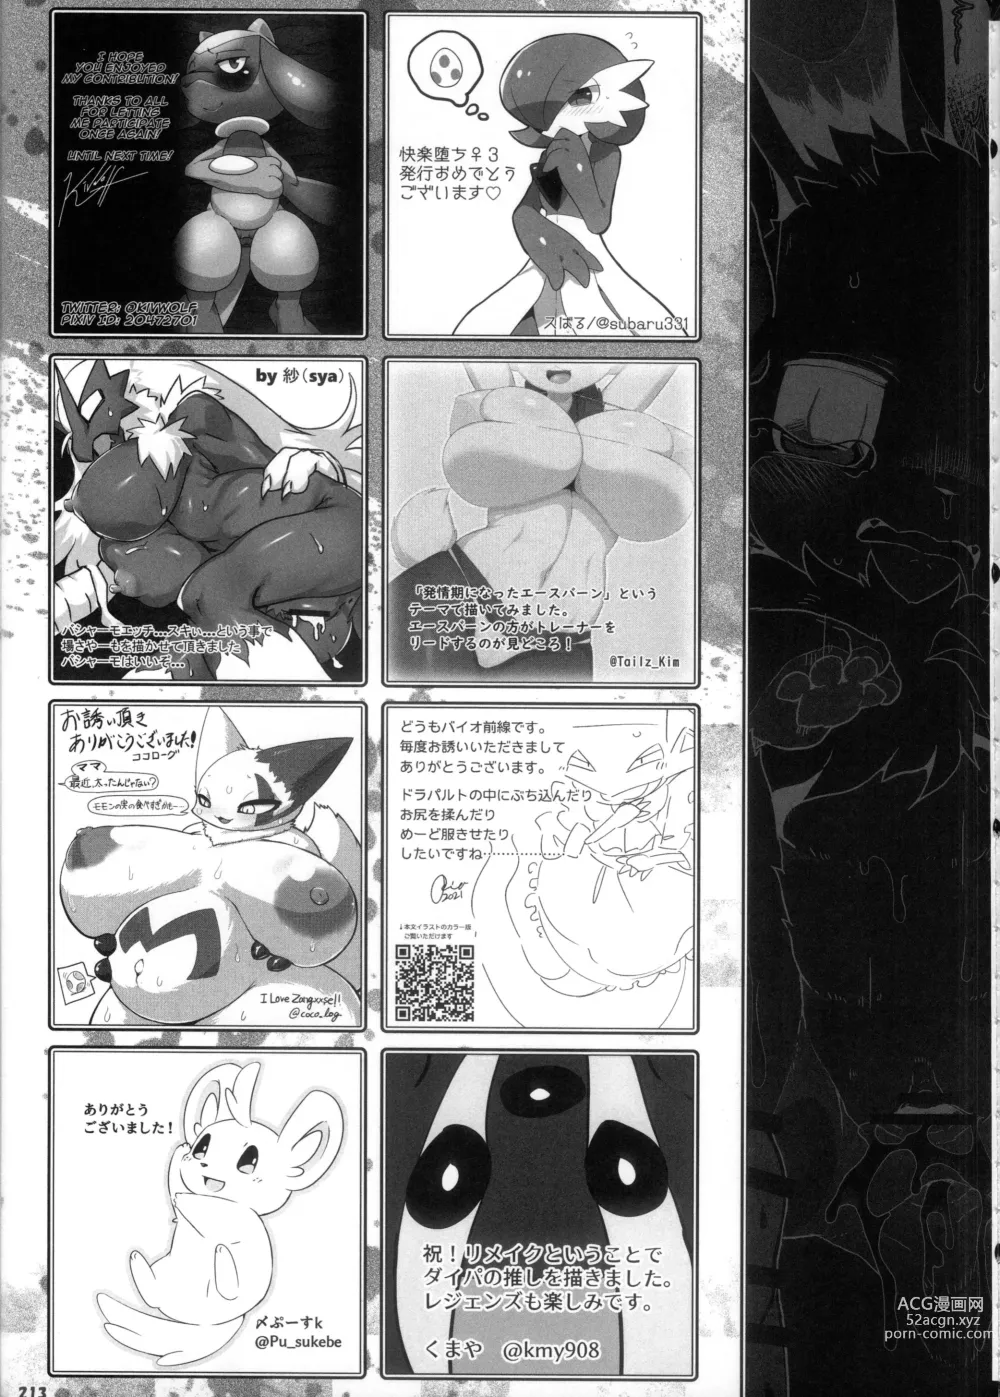 Page 212 of doujinshi Kairaku Ochi ♀ 3